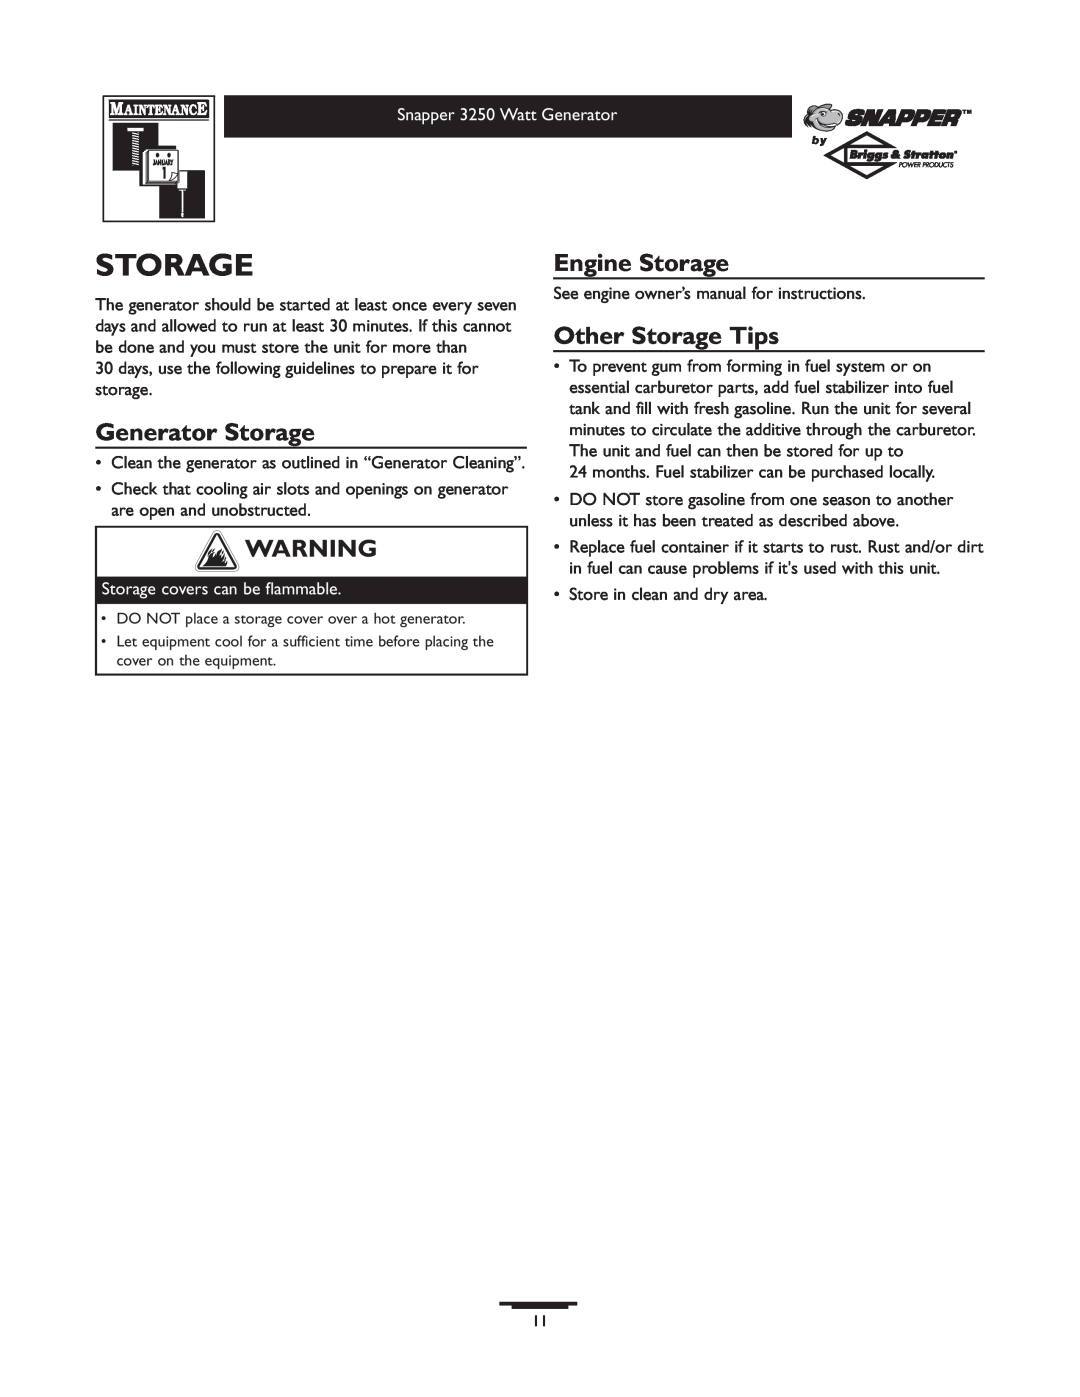 Snapper 1667-0 owner manual Generator Storage, Engine Storage, Other Storage Tips, Storage covers can be flammable 